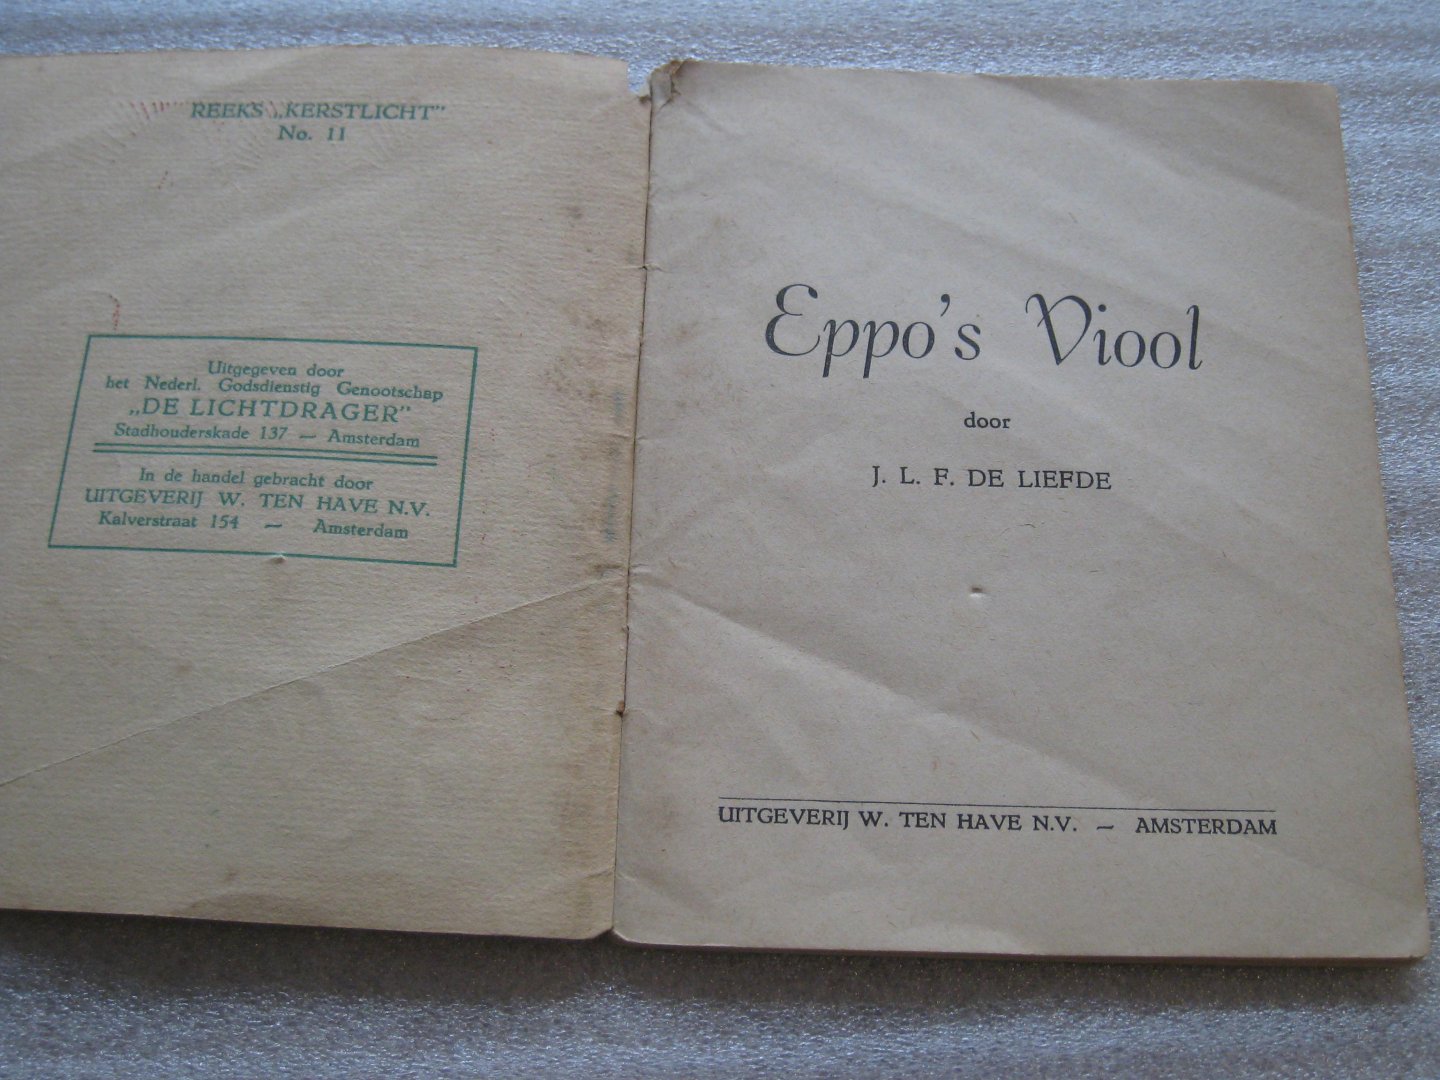 Liefde, J.L.F. de - Eppo's Viool / Reeks "Kerstlicht" No. 11